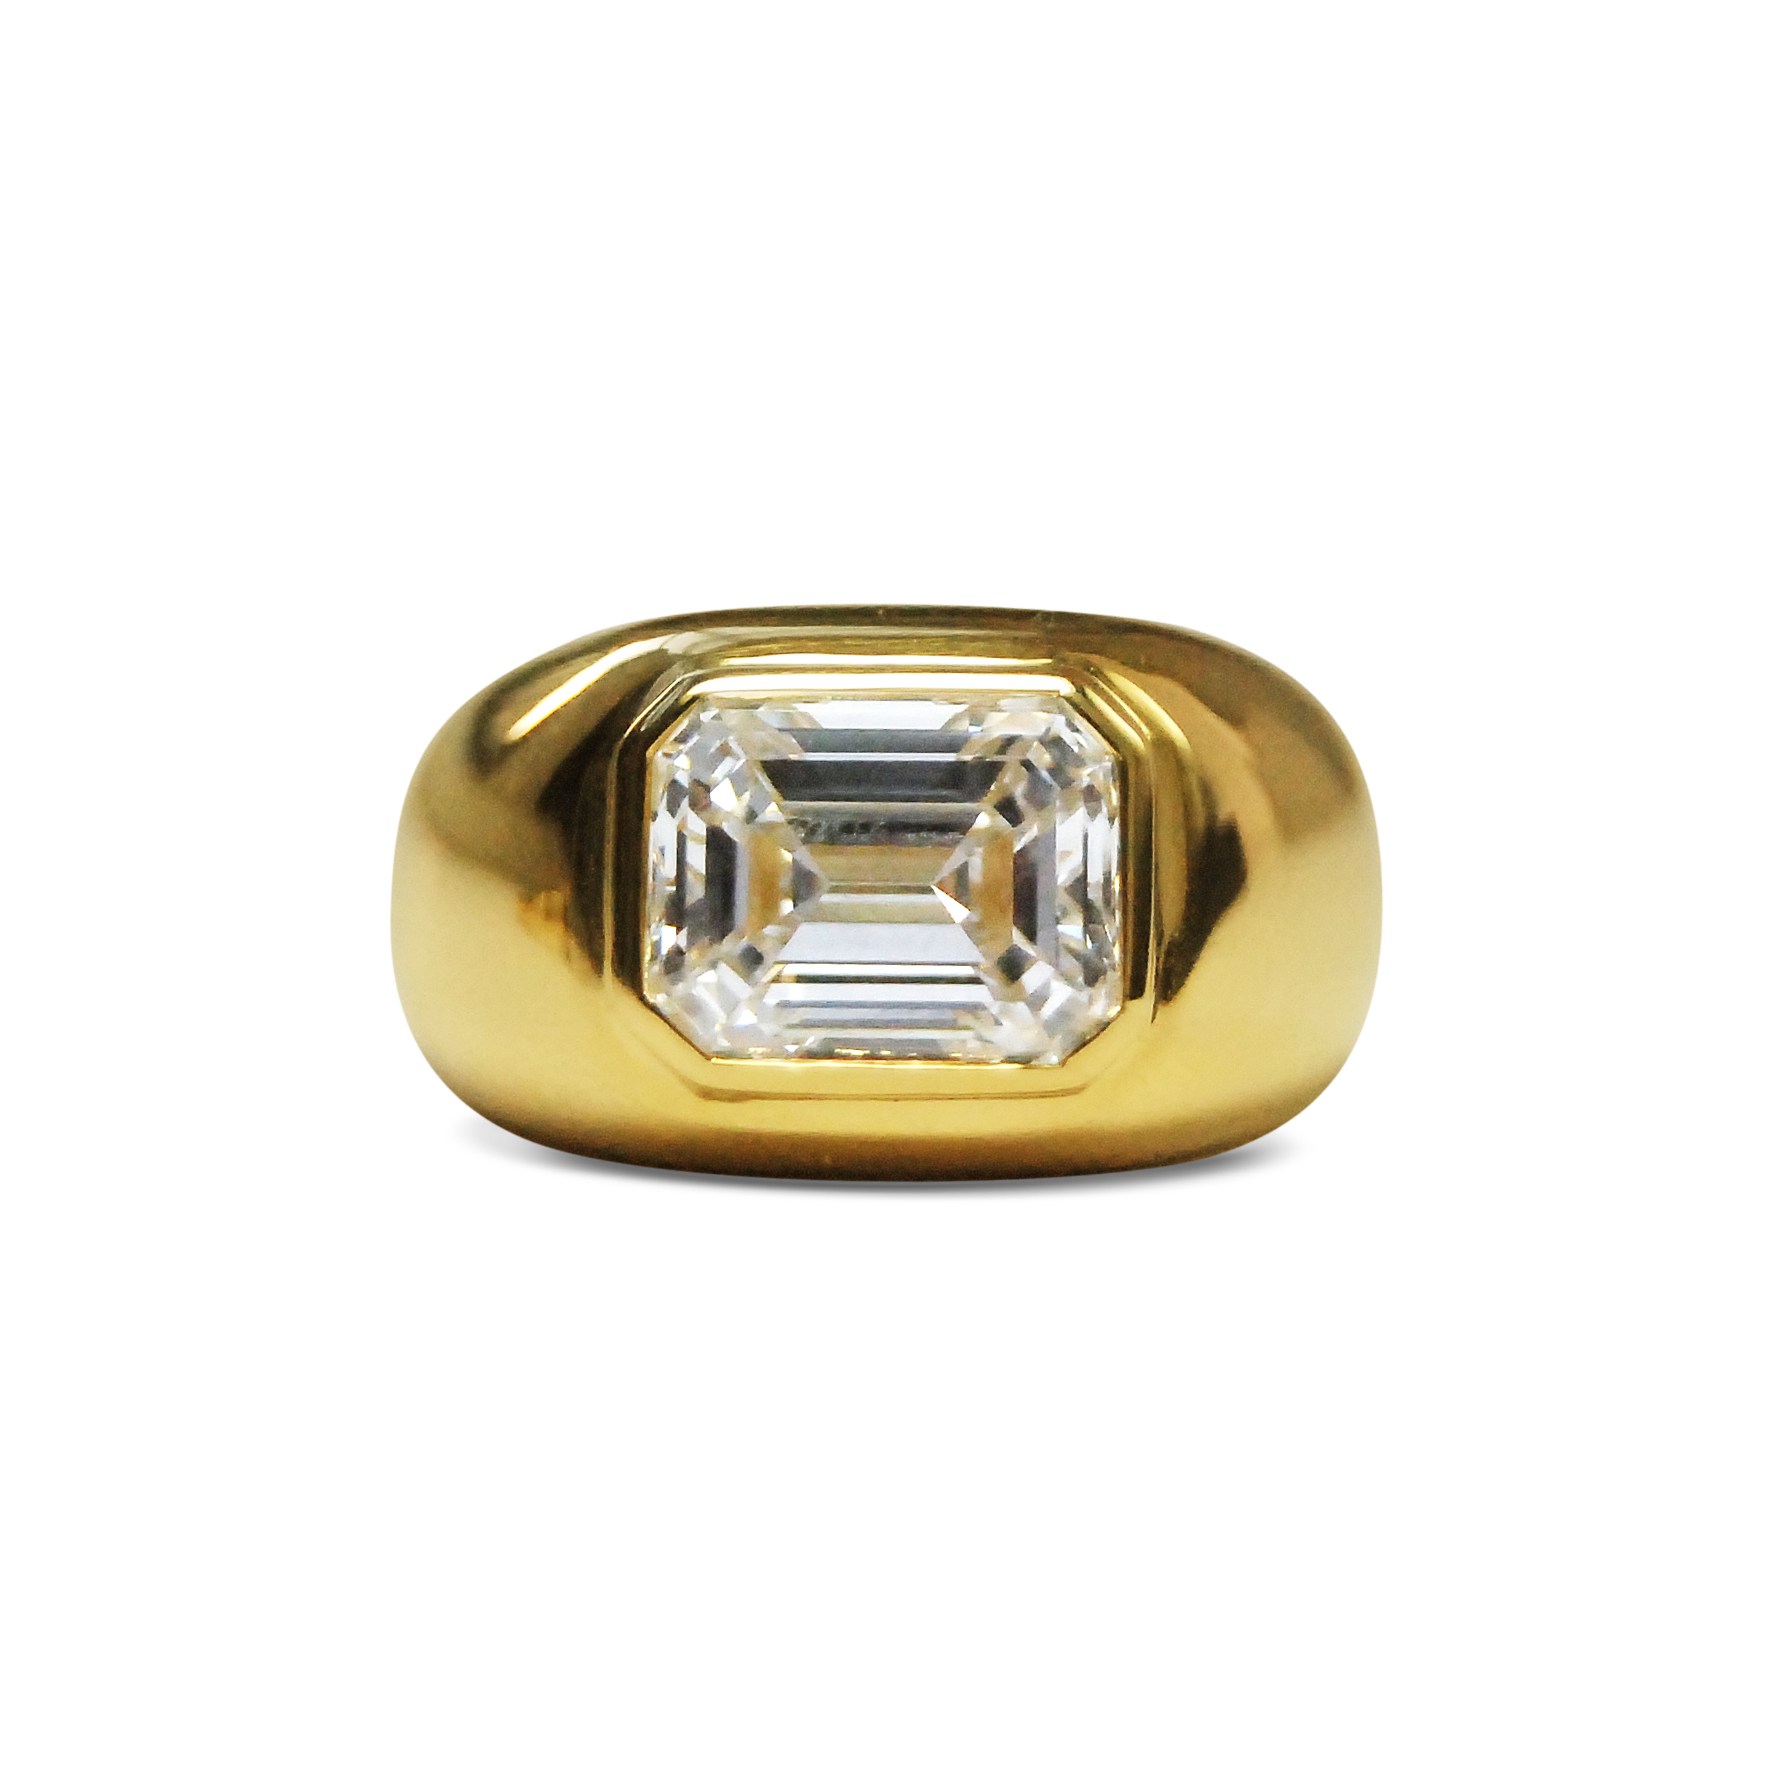 Emerald-cut-diamond-and-18ct-yellow-gold-ring-2.jpg